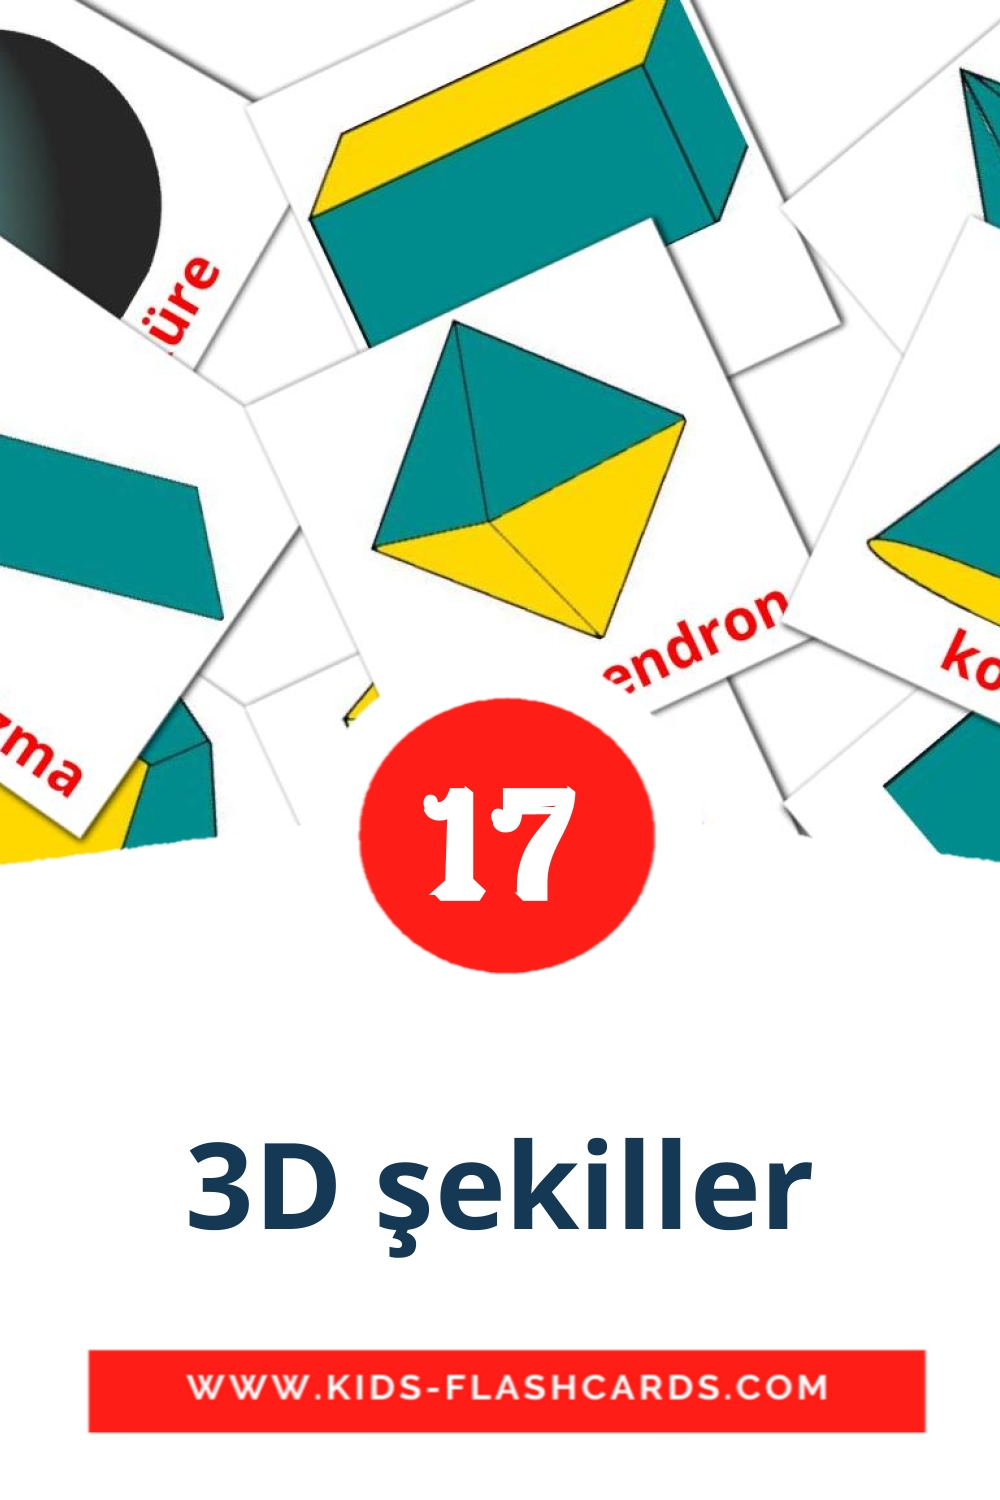 17 carte illustrate di 3D şekiller per la scuola materna in turco